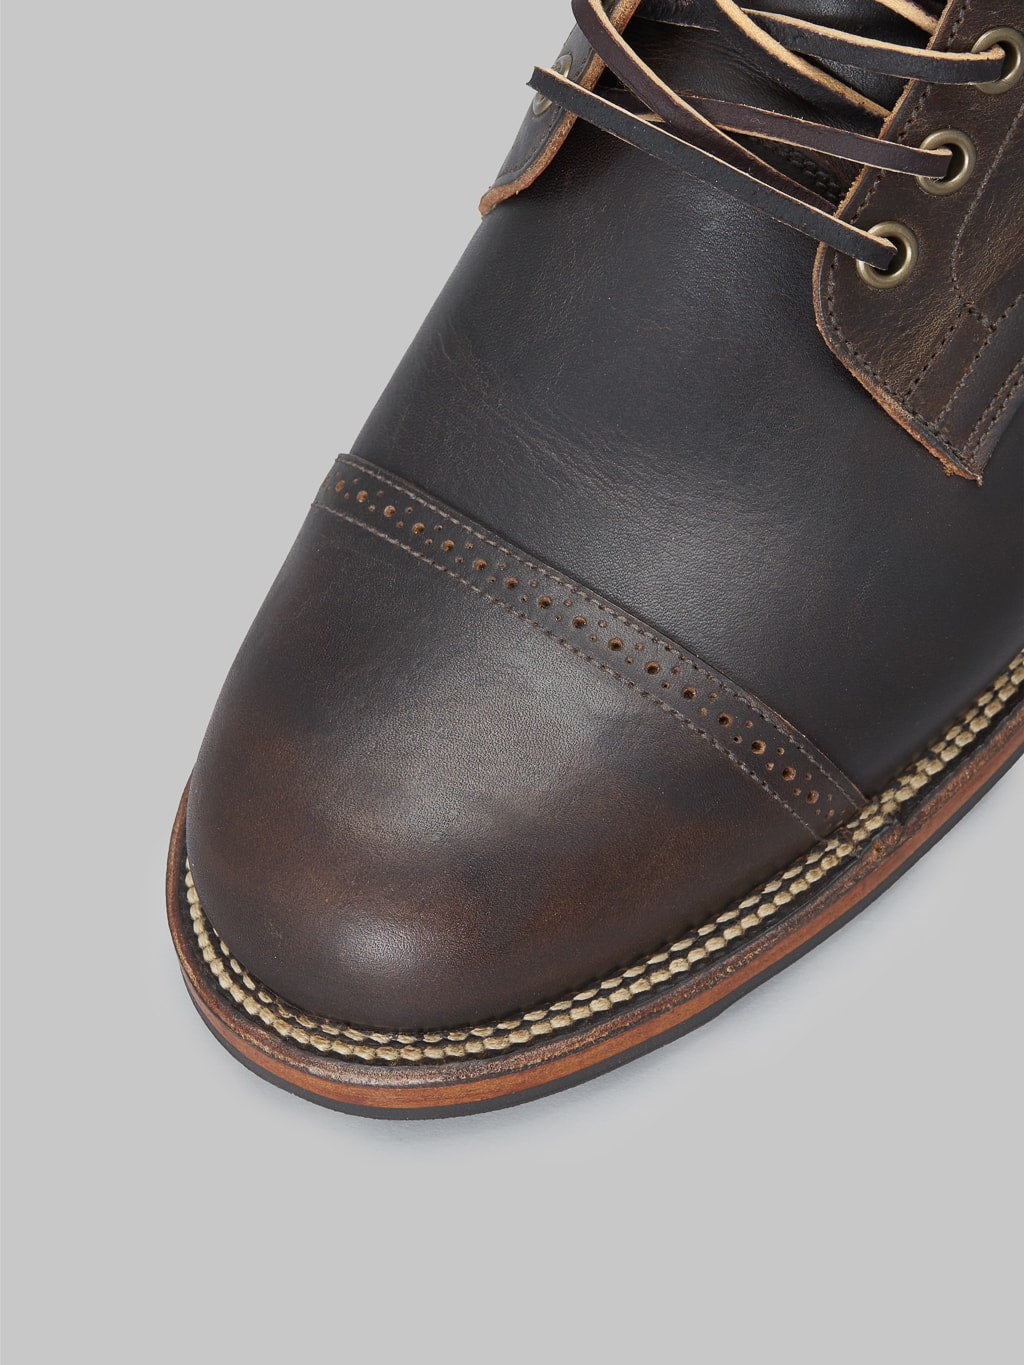 viberg service boot 2023 bct antique phoenix dark brown leather cap toe